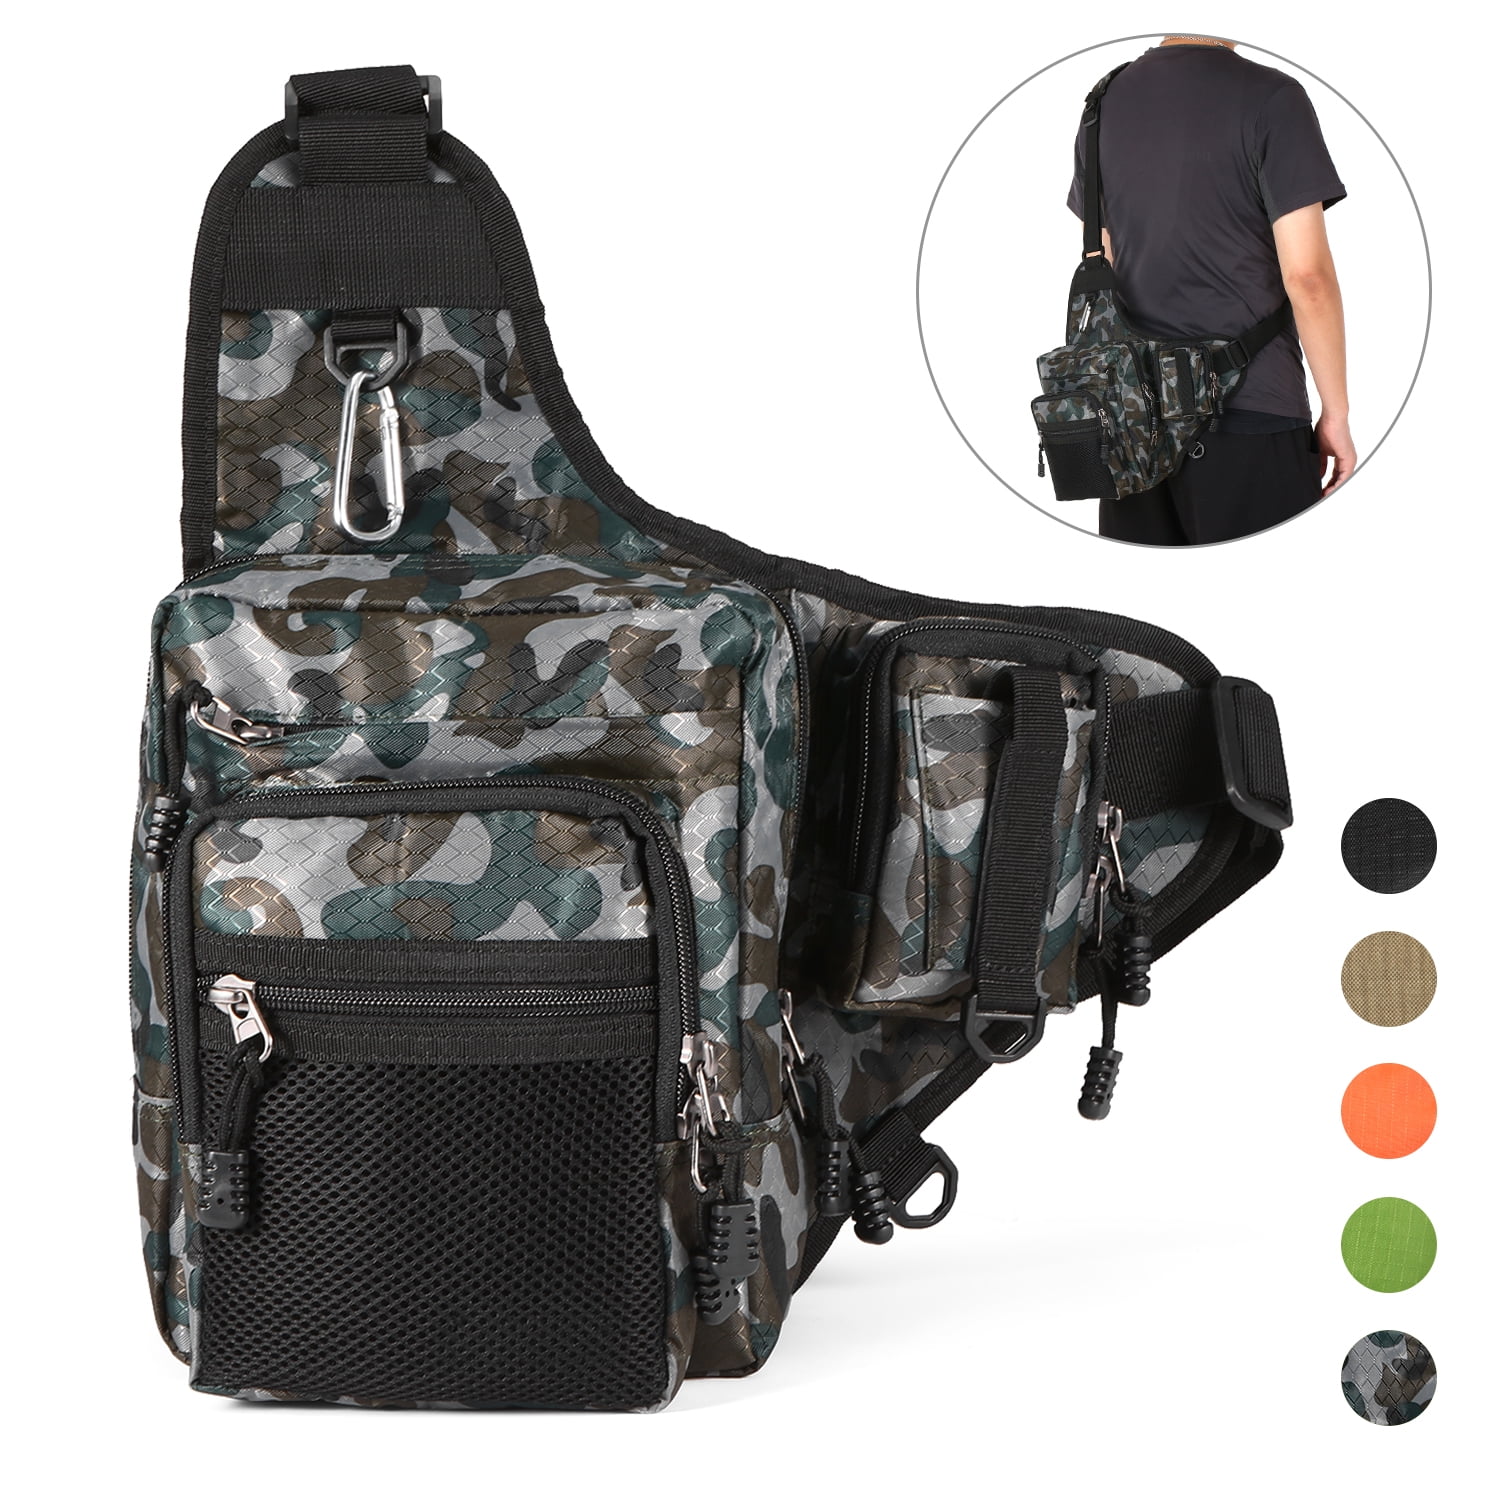 Thorza Fishing Tackle Backpack – Waterproof, Heavy Duty Fishing